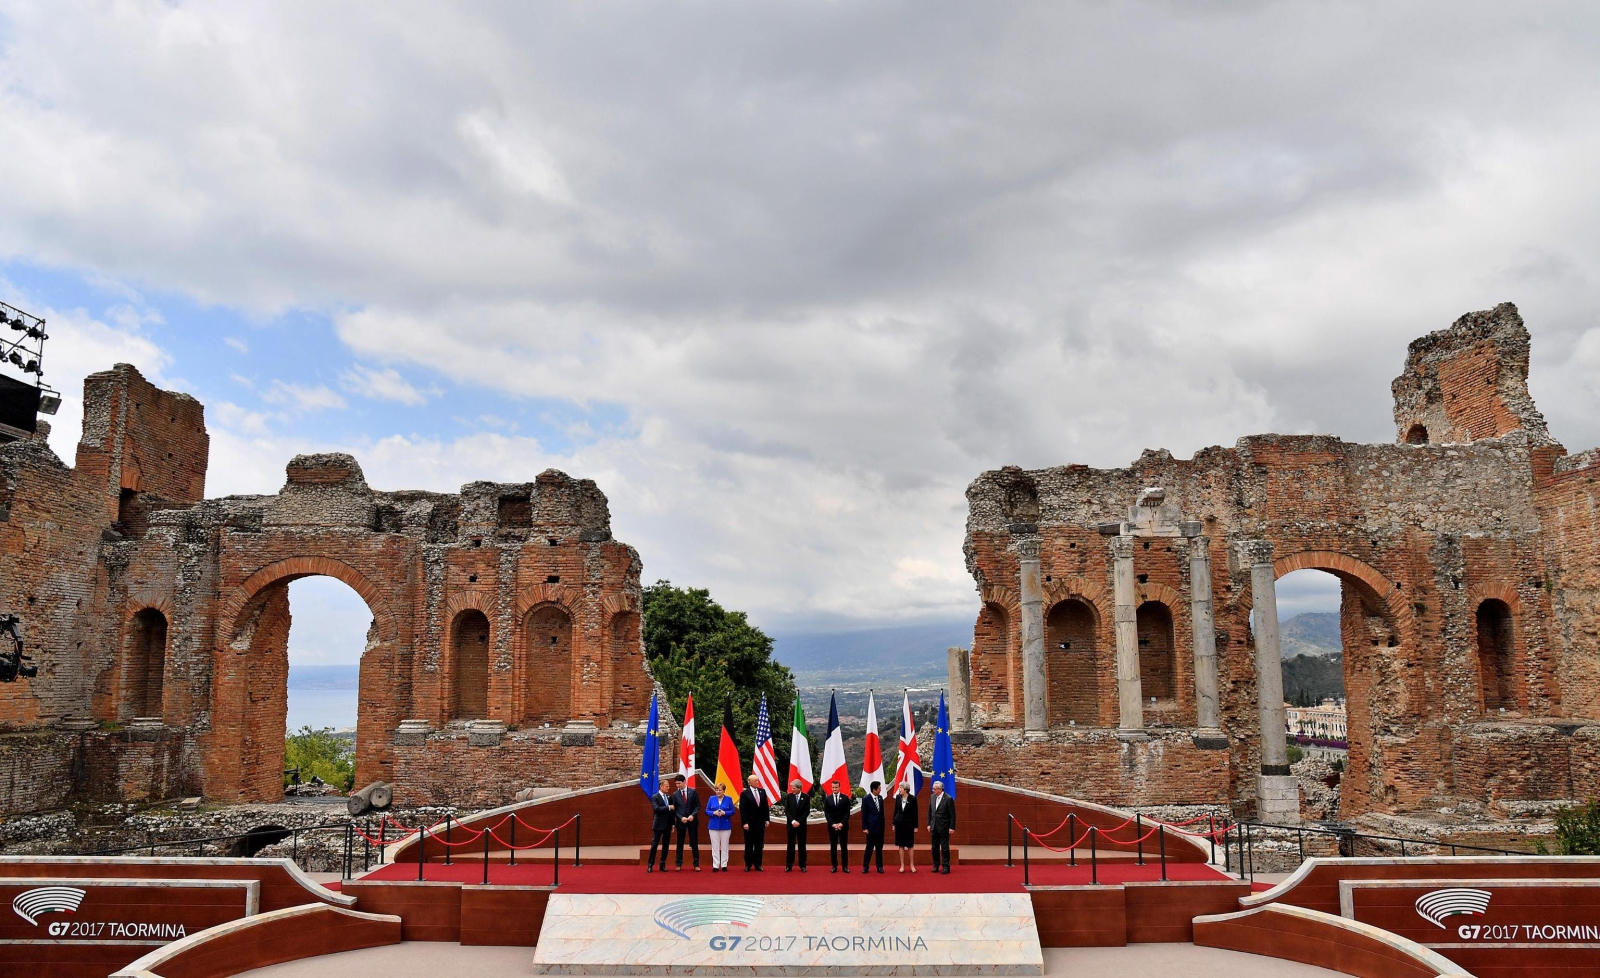 Szczyt G7 we Włoszech.
Fot. PAP/EPA/ETTORE FERRARI